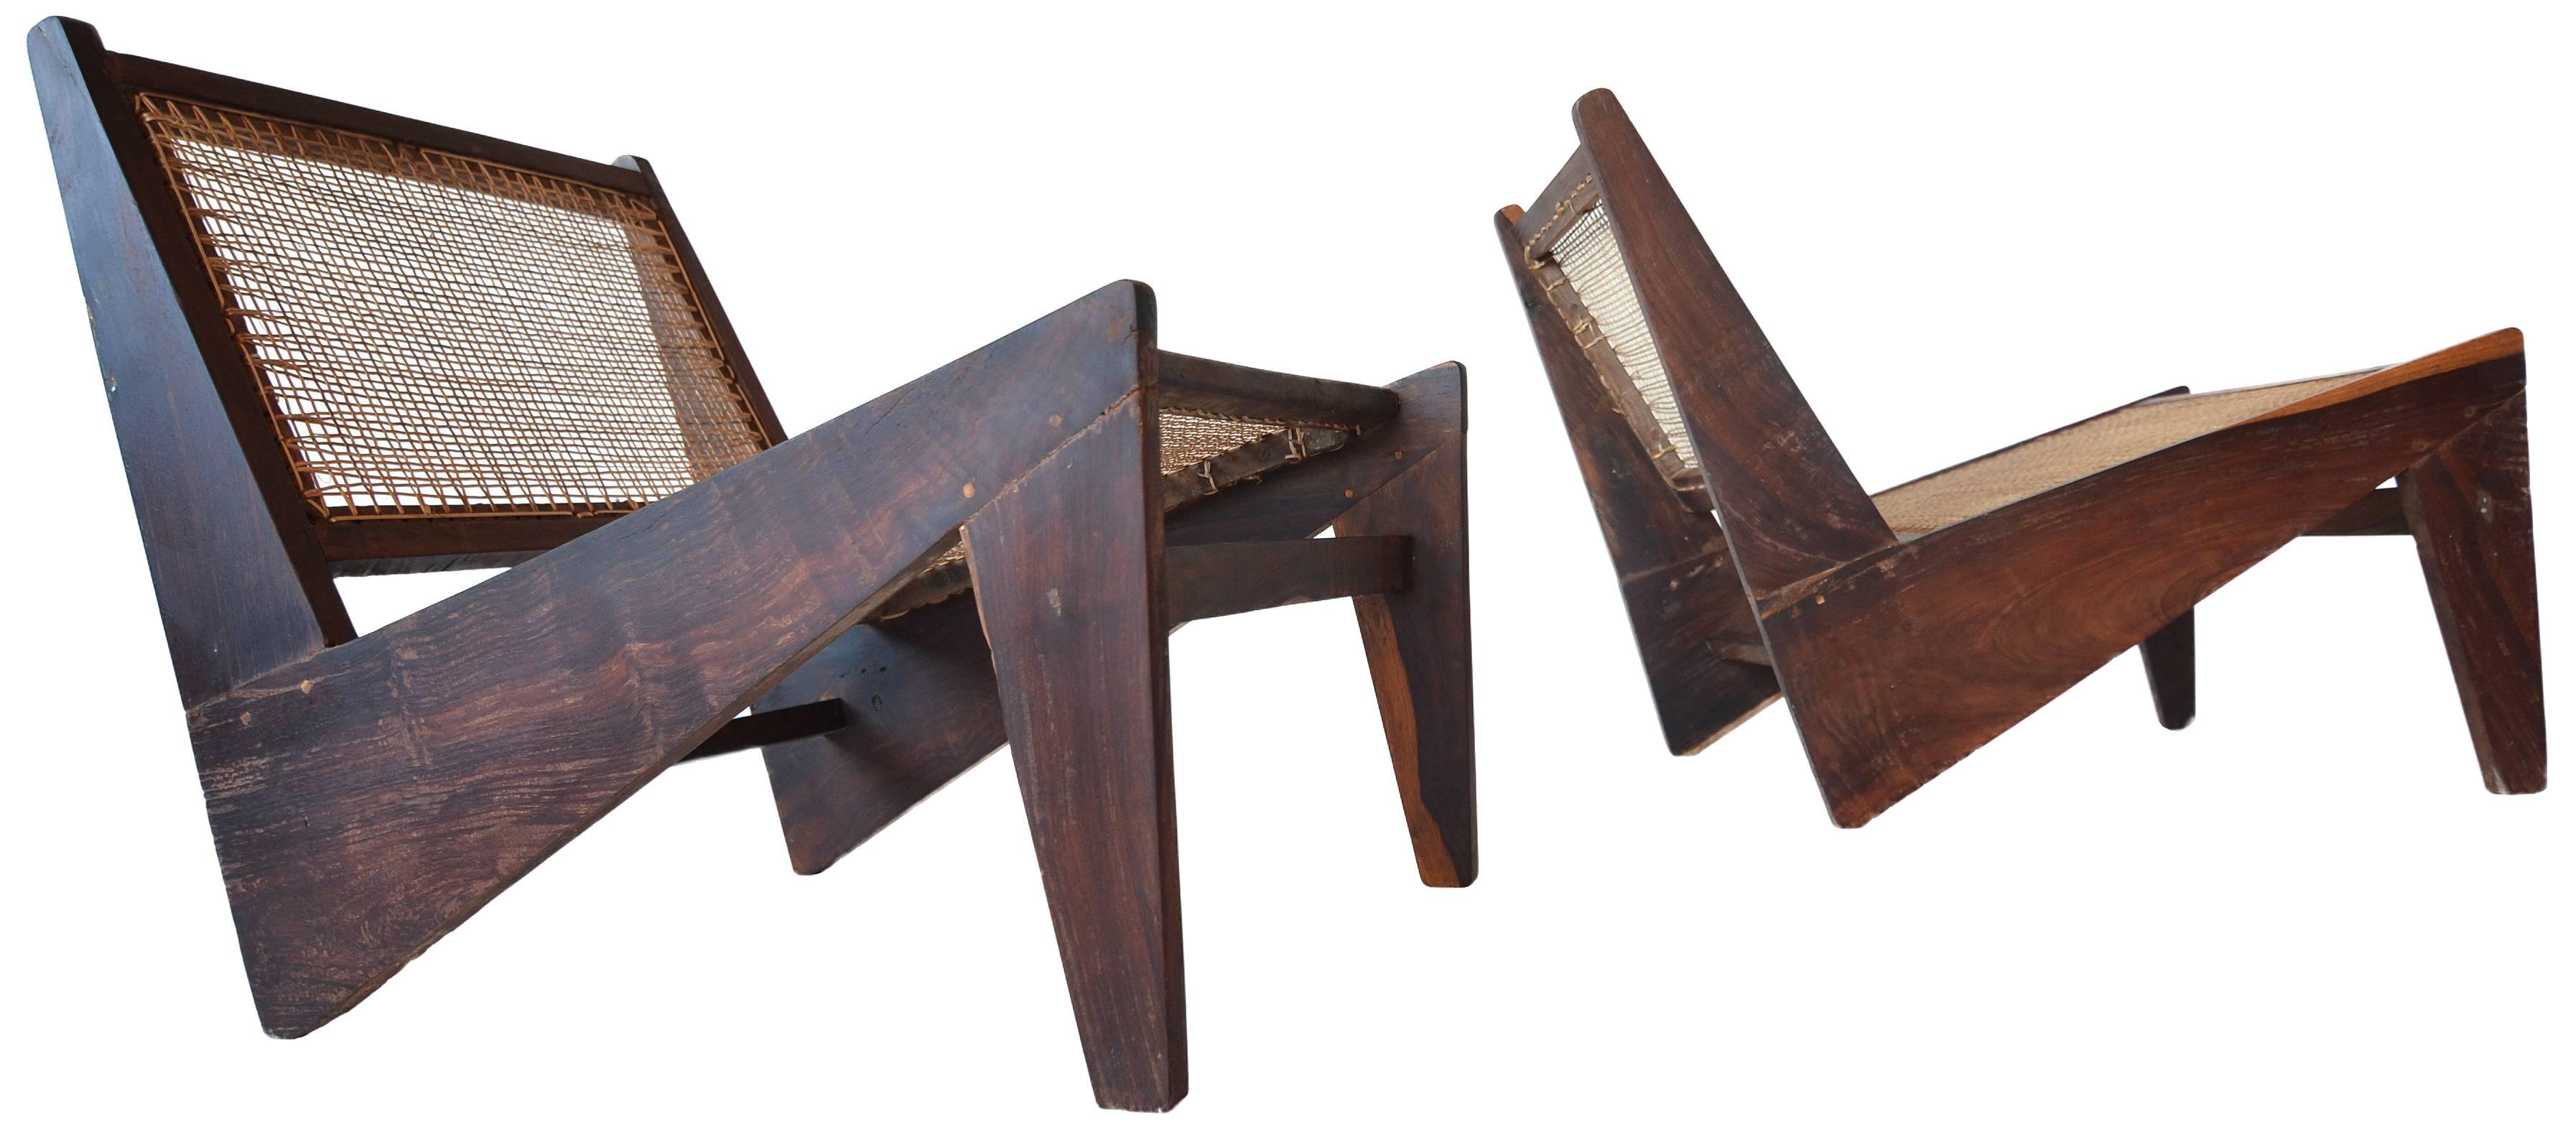 Indian Rare Pair of Pierre Jeanneret Kangaroo Low Chairs in Sissoo Rosewood